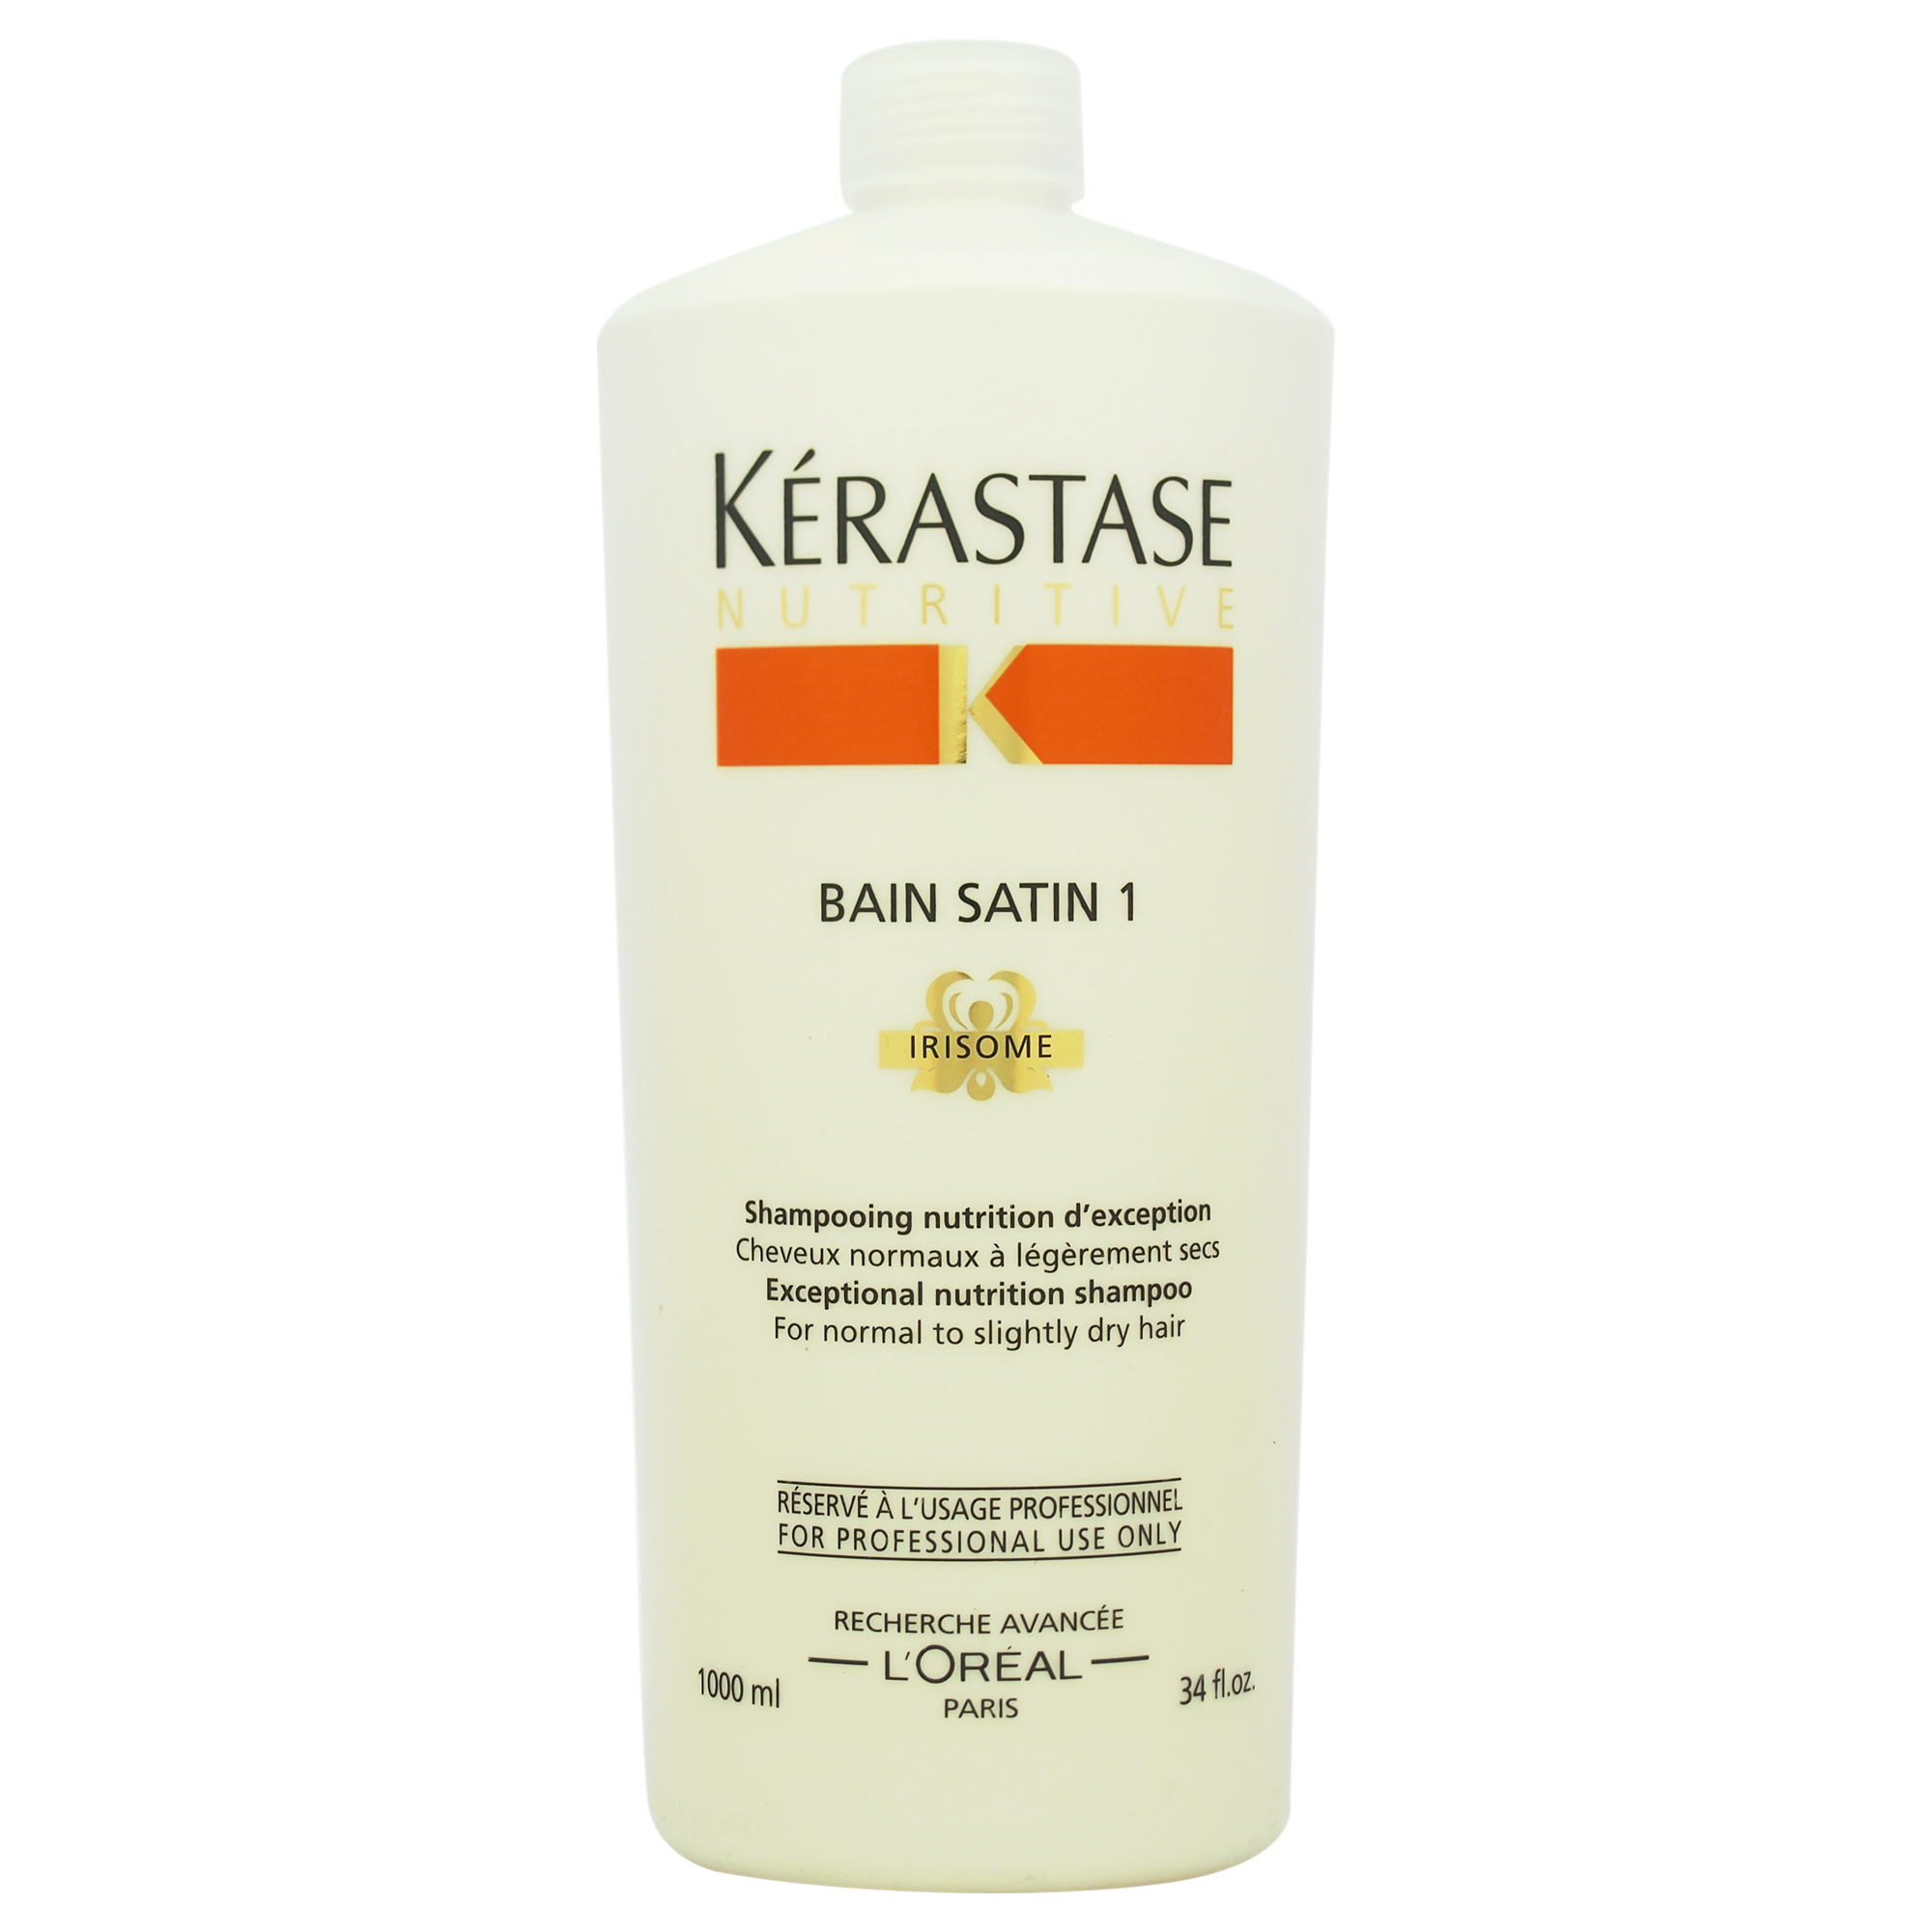 KERASTASE Nutritive Bain Satin 1 Shampoo